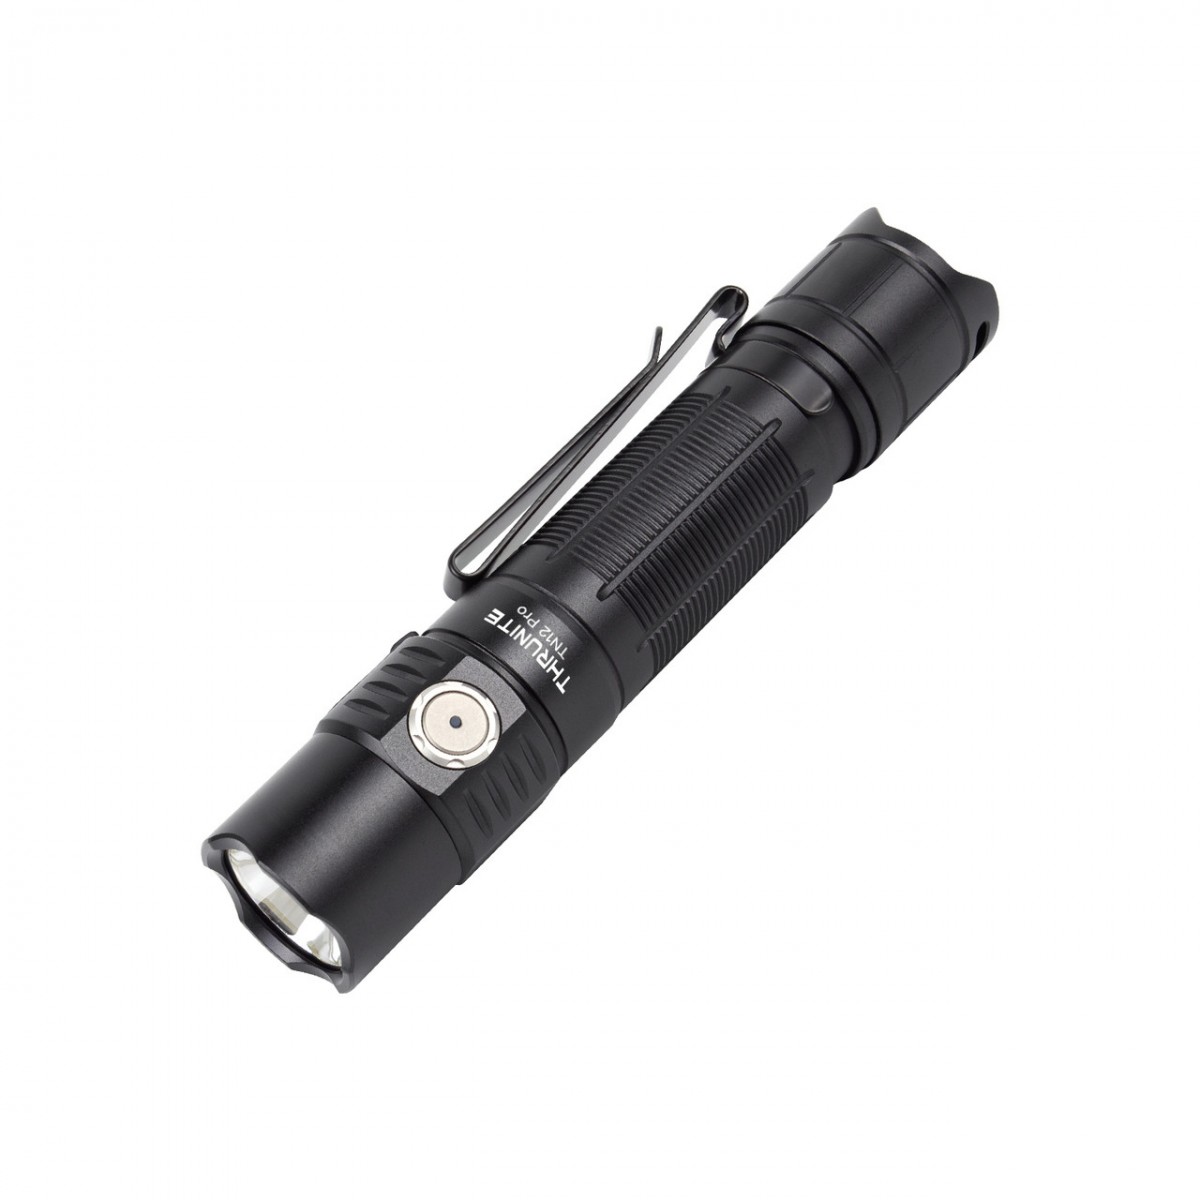 ThruNite TN12 Pro Rechargeable Flashlight